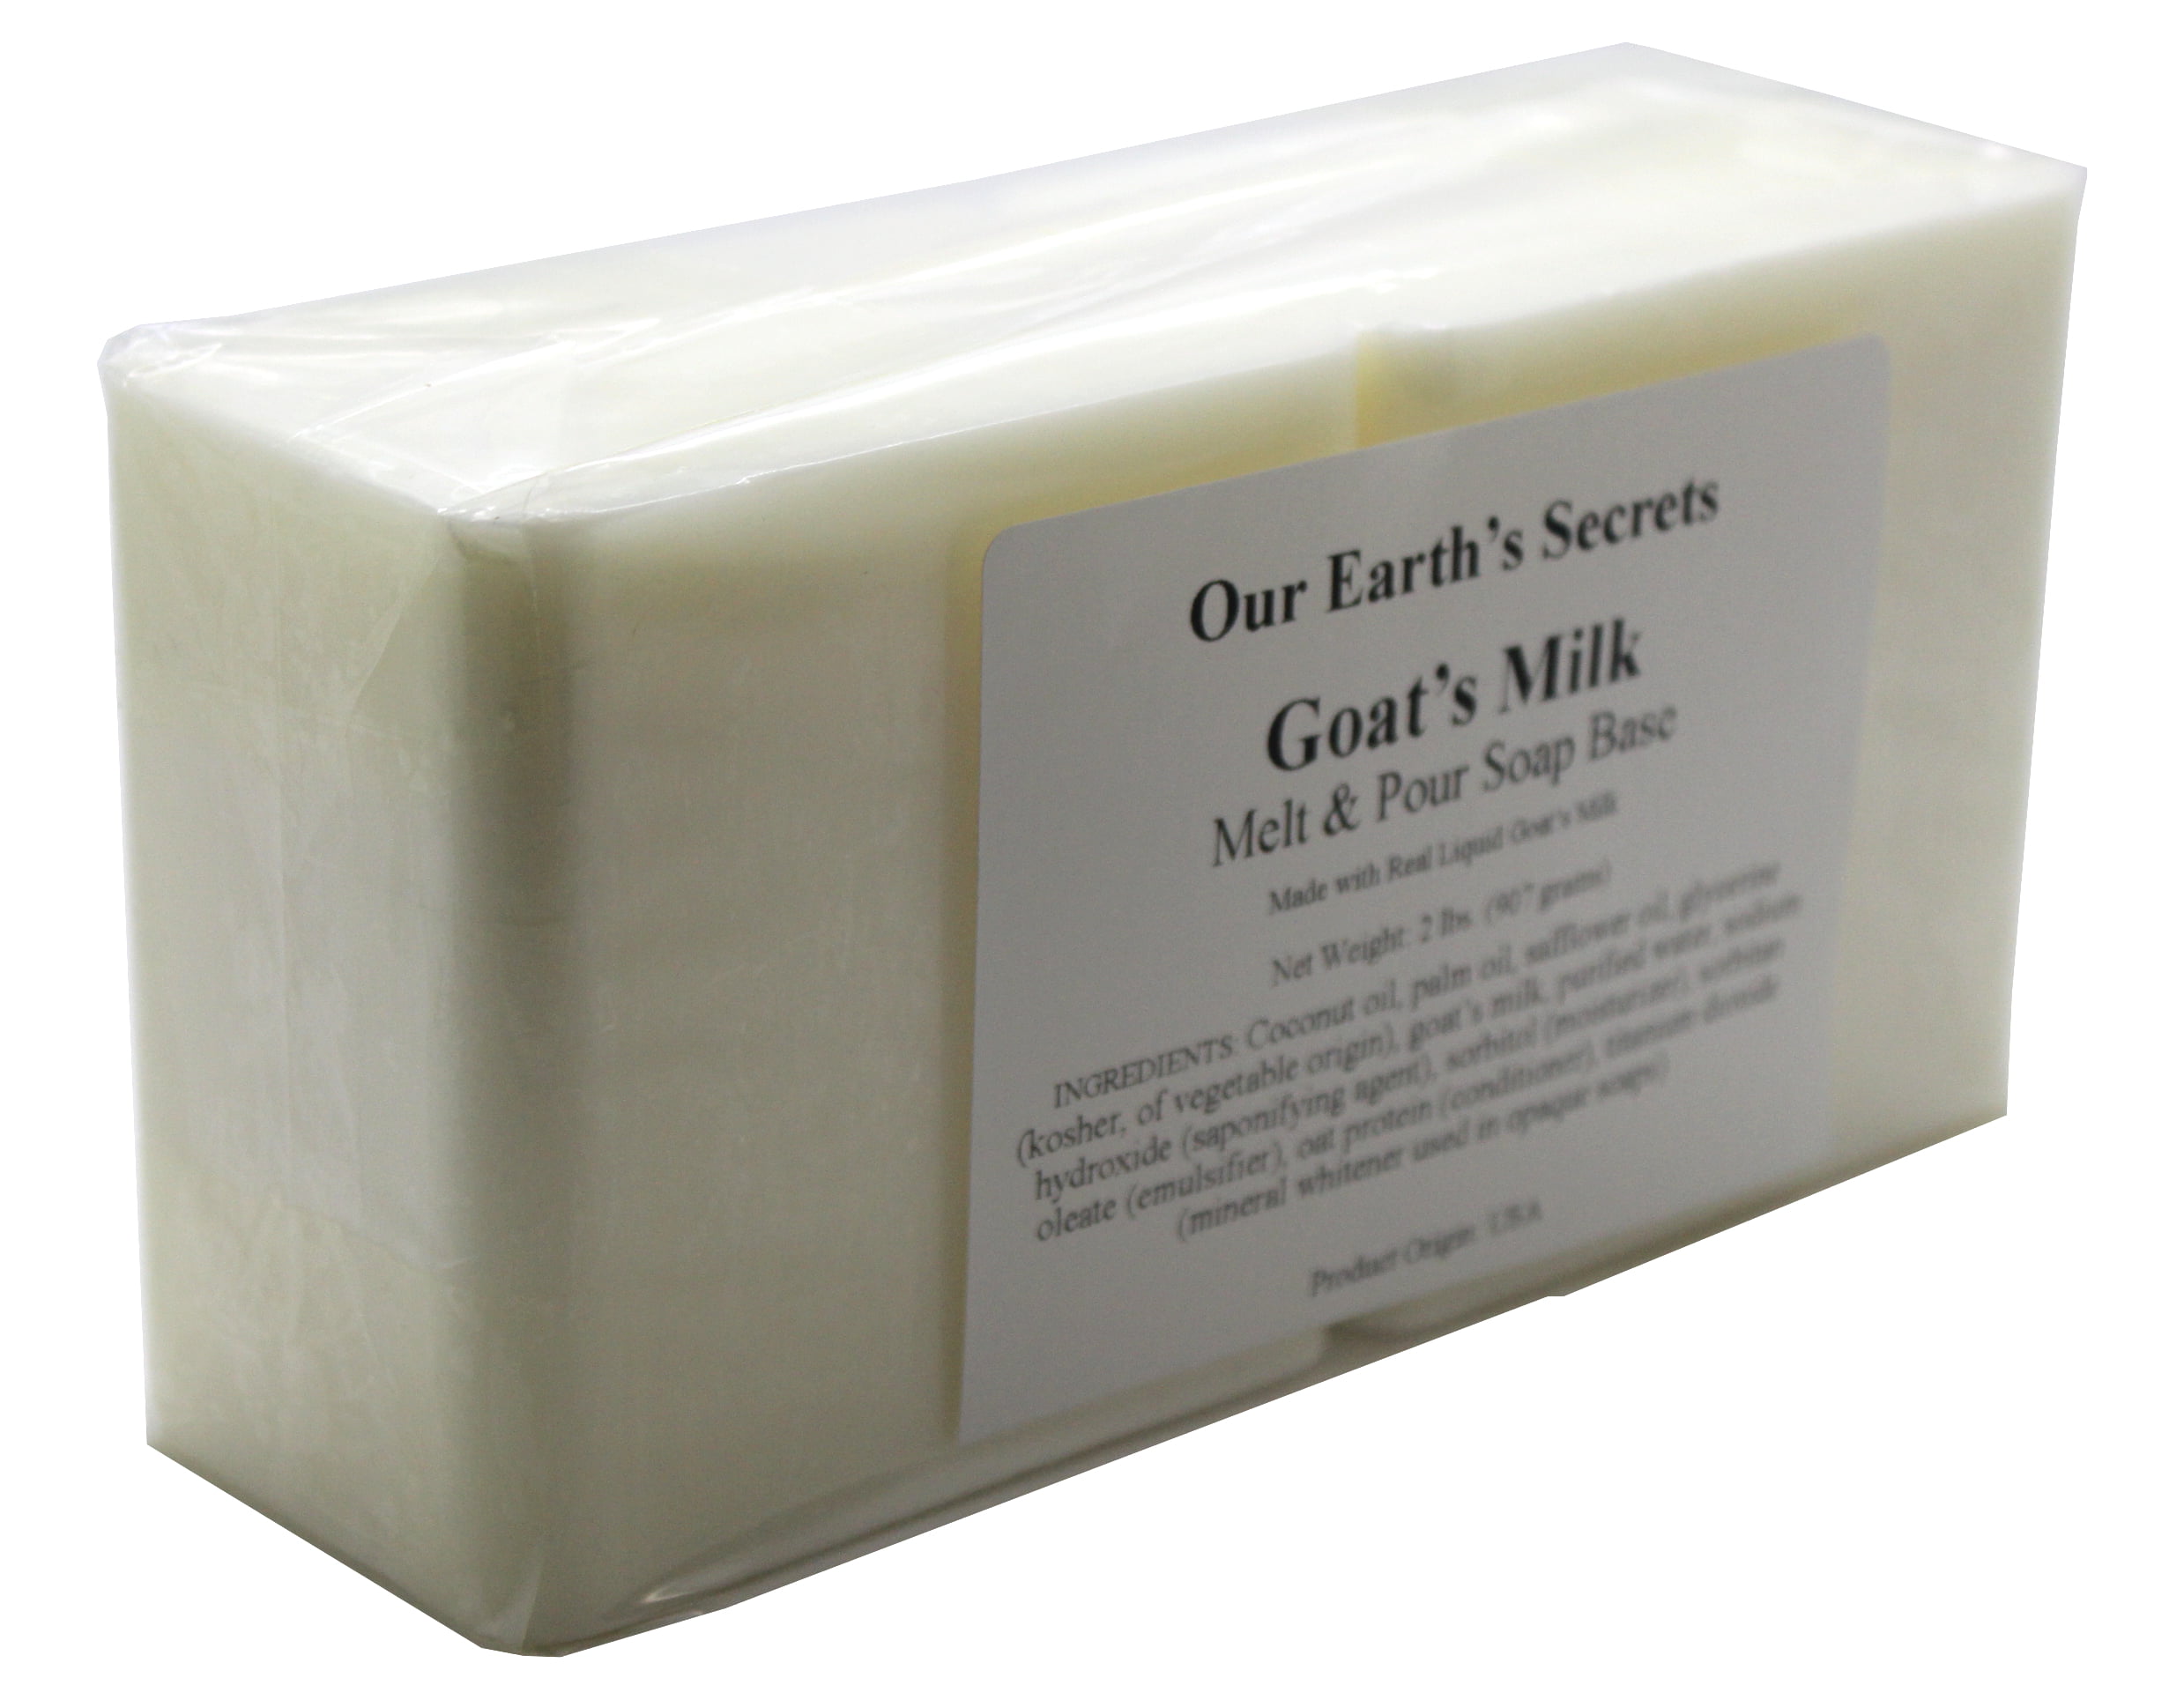 Goats Milk - 2 Lbs Melt and Pour Soap Base - Our Earth's Secrets 